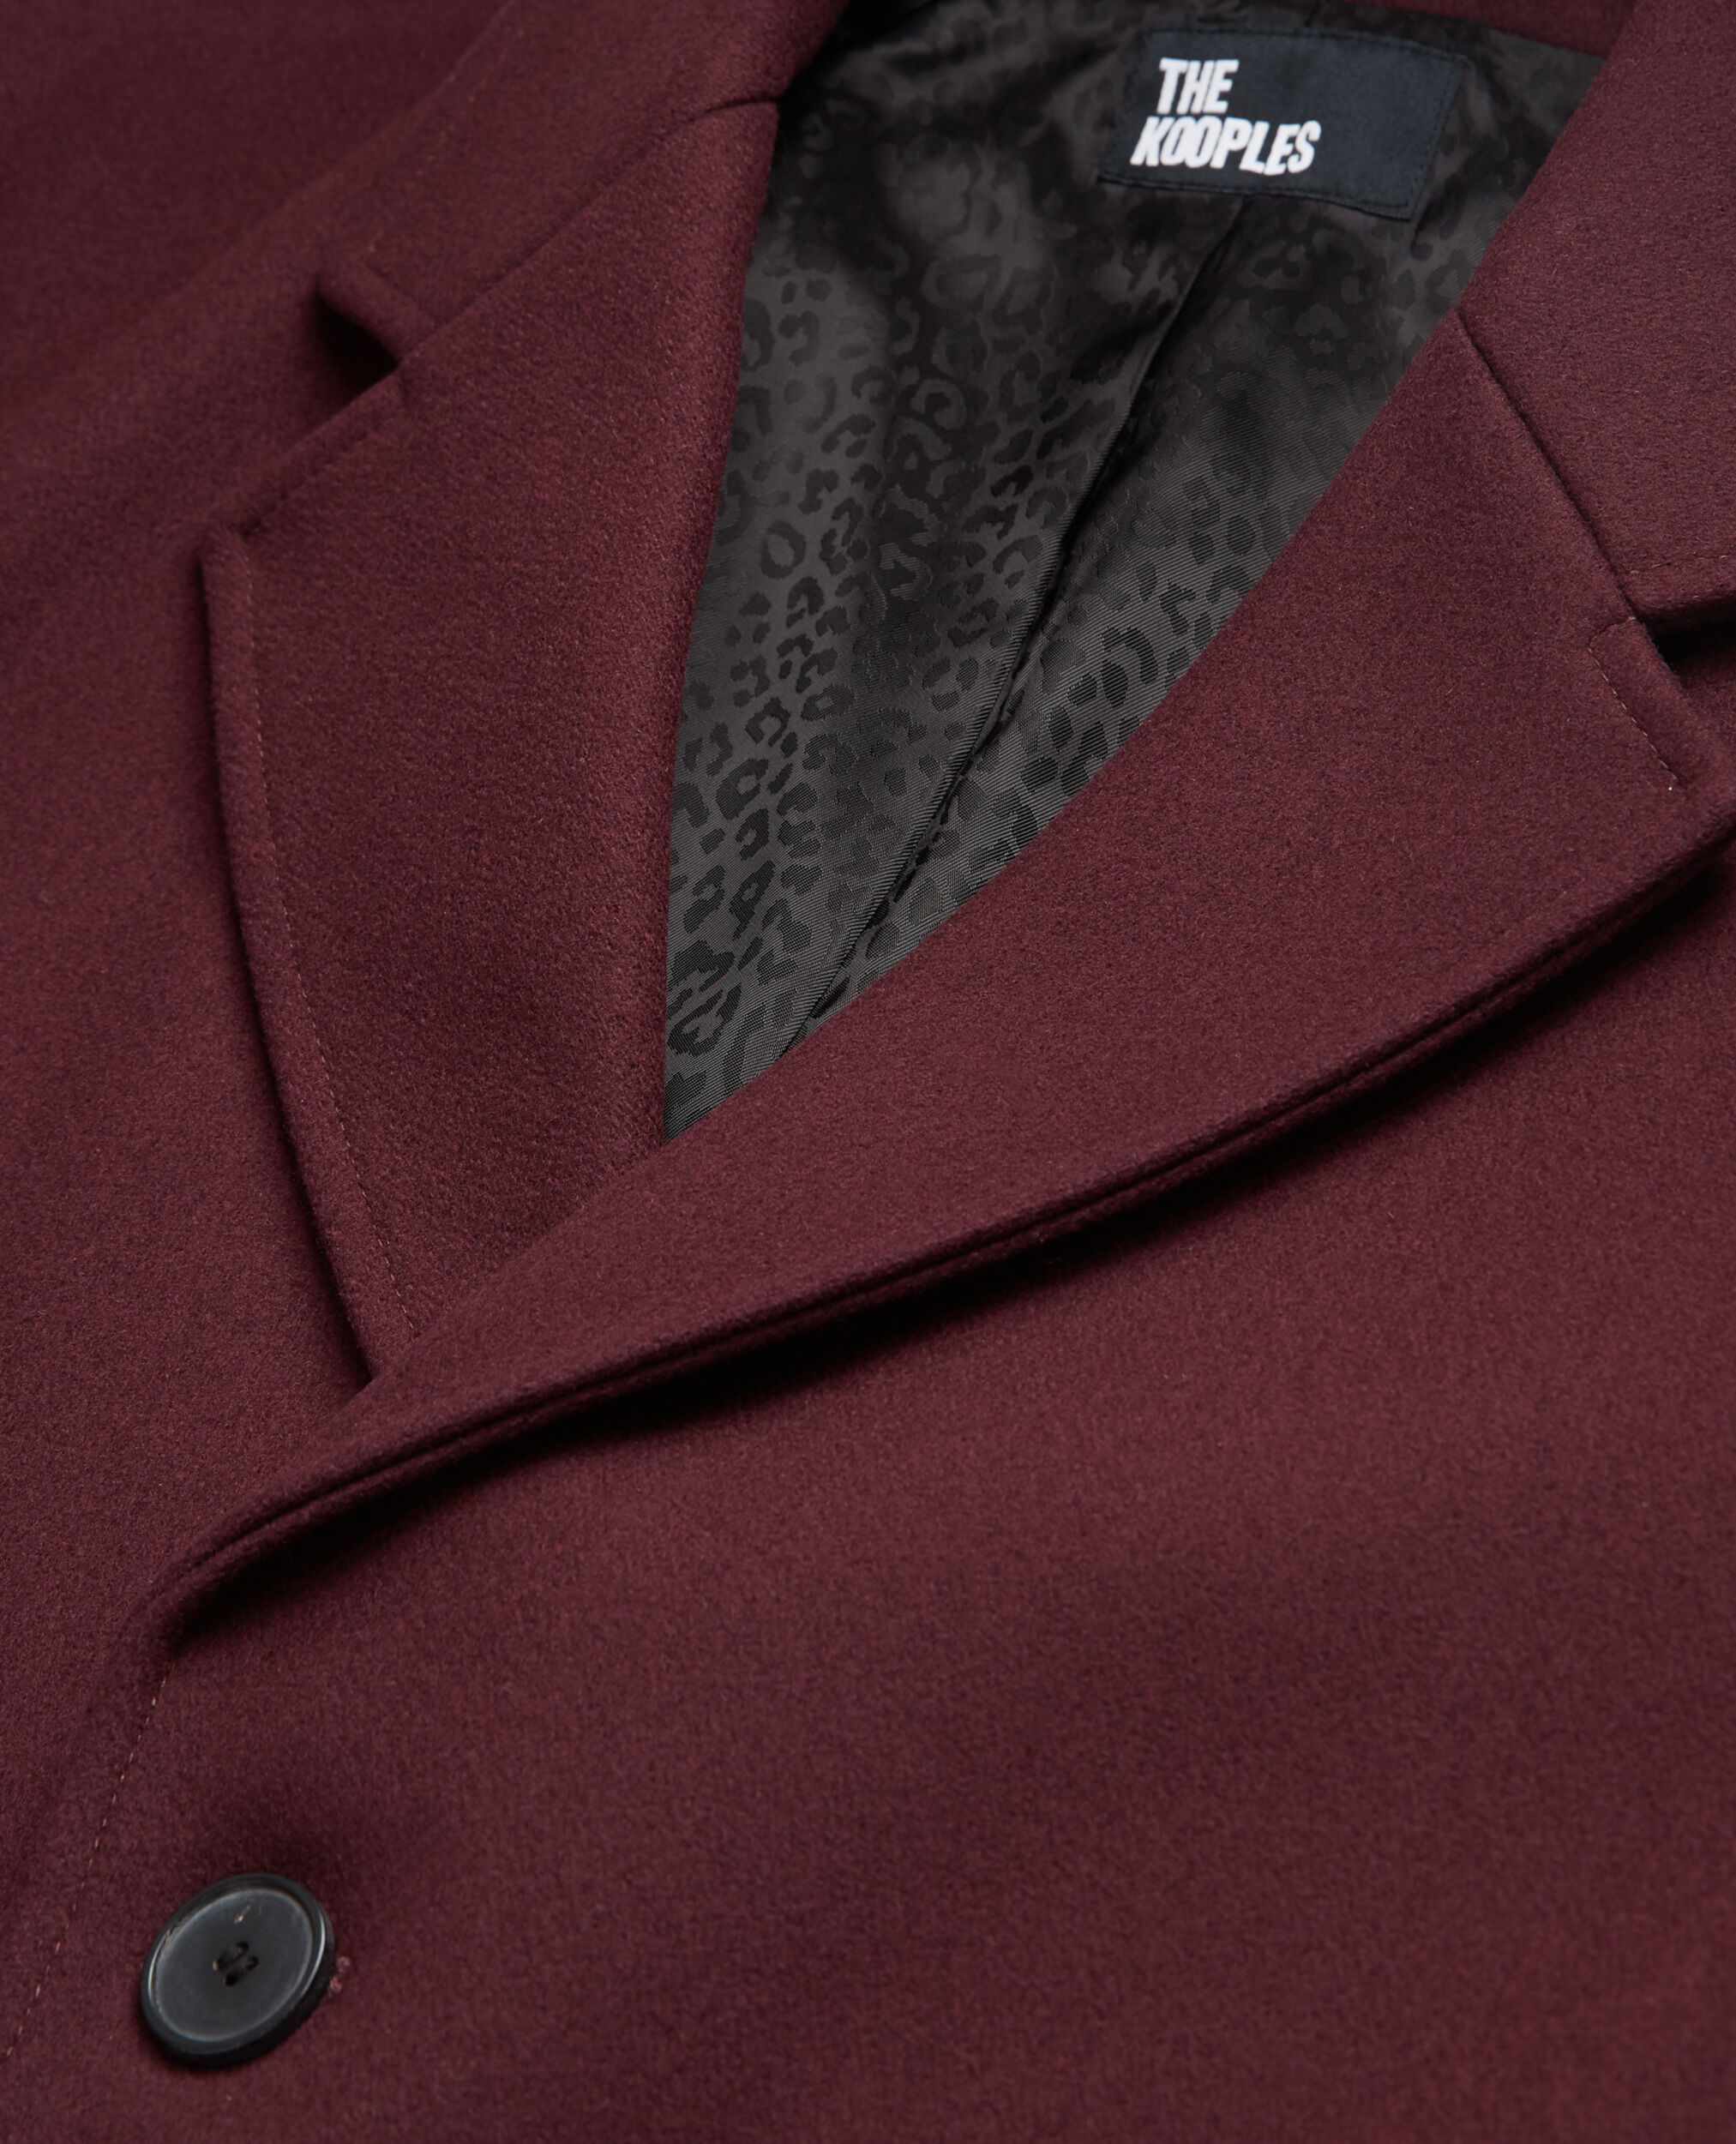 Burgundy wool coat, BURGUNDY, hi-res image number null